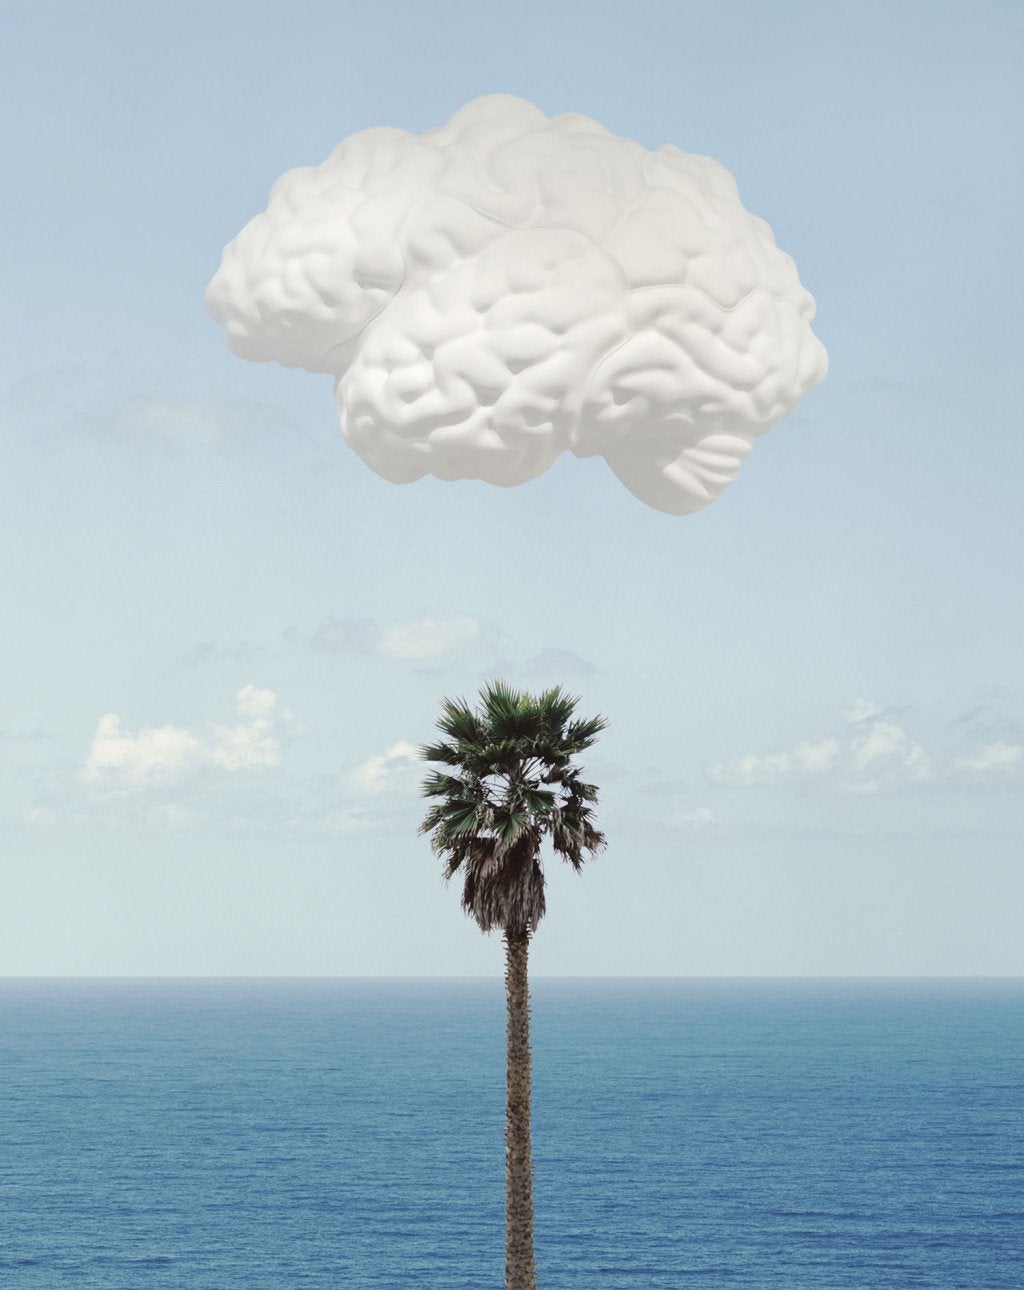 John Baldessari Landscape Print - Brain/Cloud (With Seascape and Palm Tree)